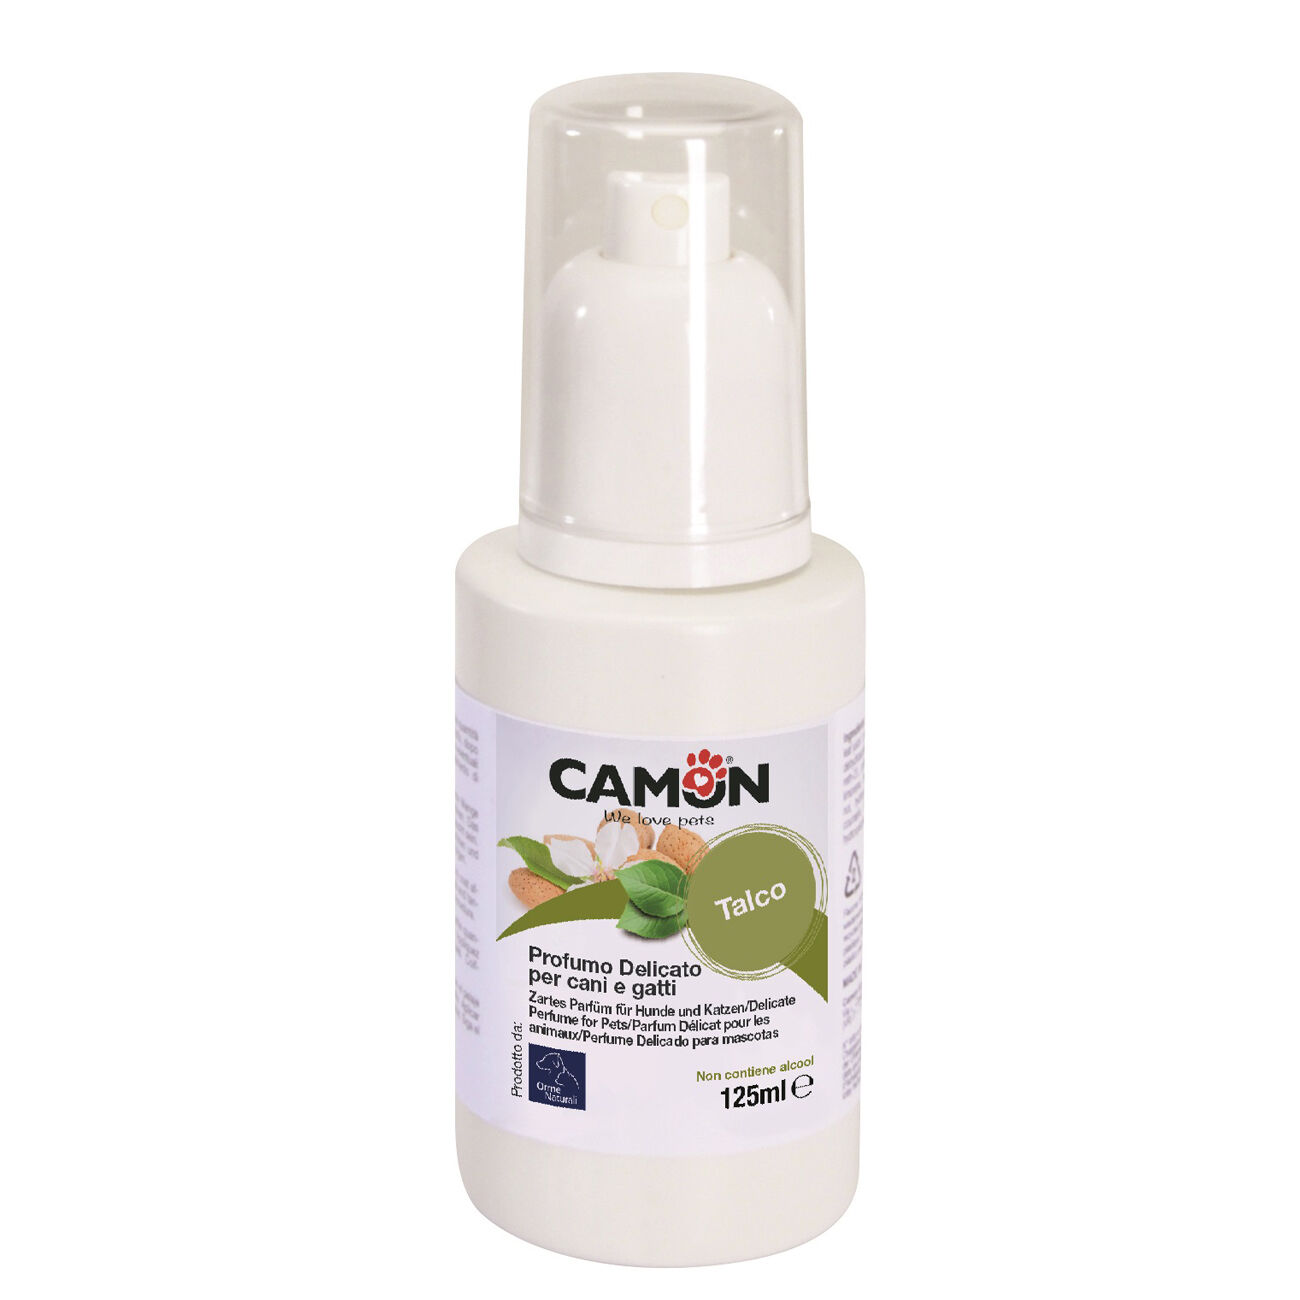 Camon-Orme-Naturali-Parfum-hunde-katzen-ohne-alkohol-Talko-125-ml-online-kaufen-CO-G810